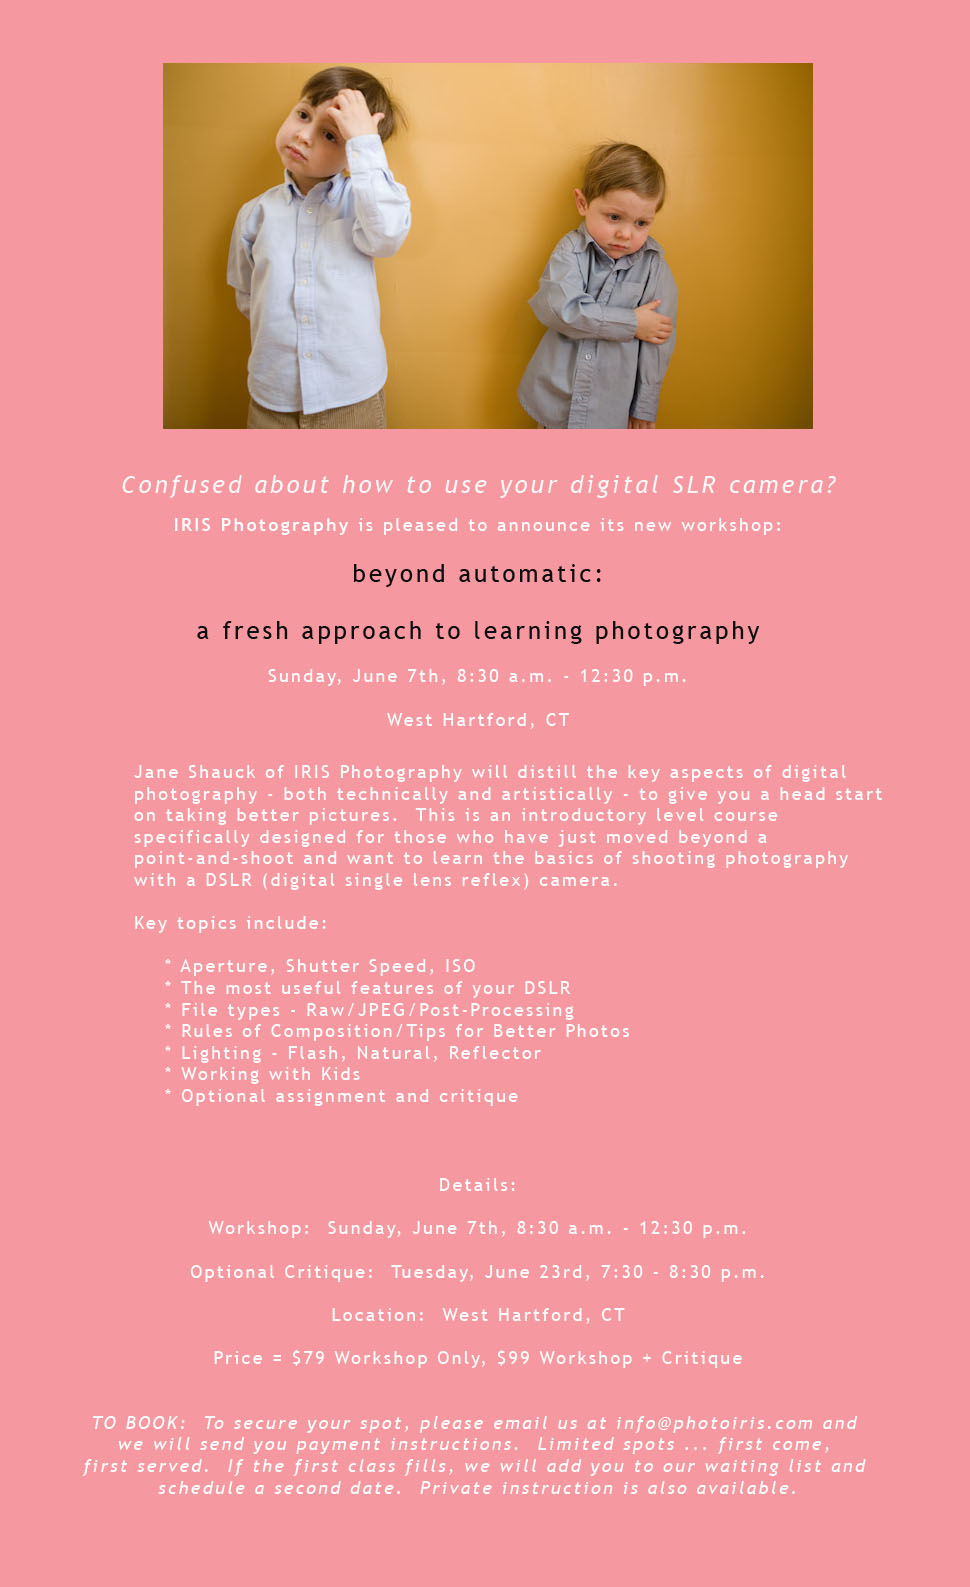 Photo workshop beyond automatic